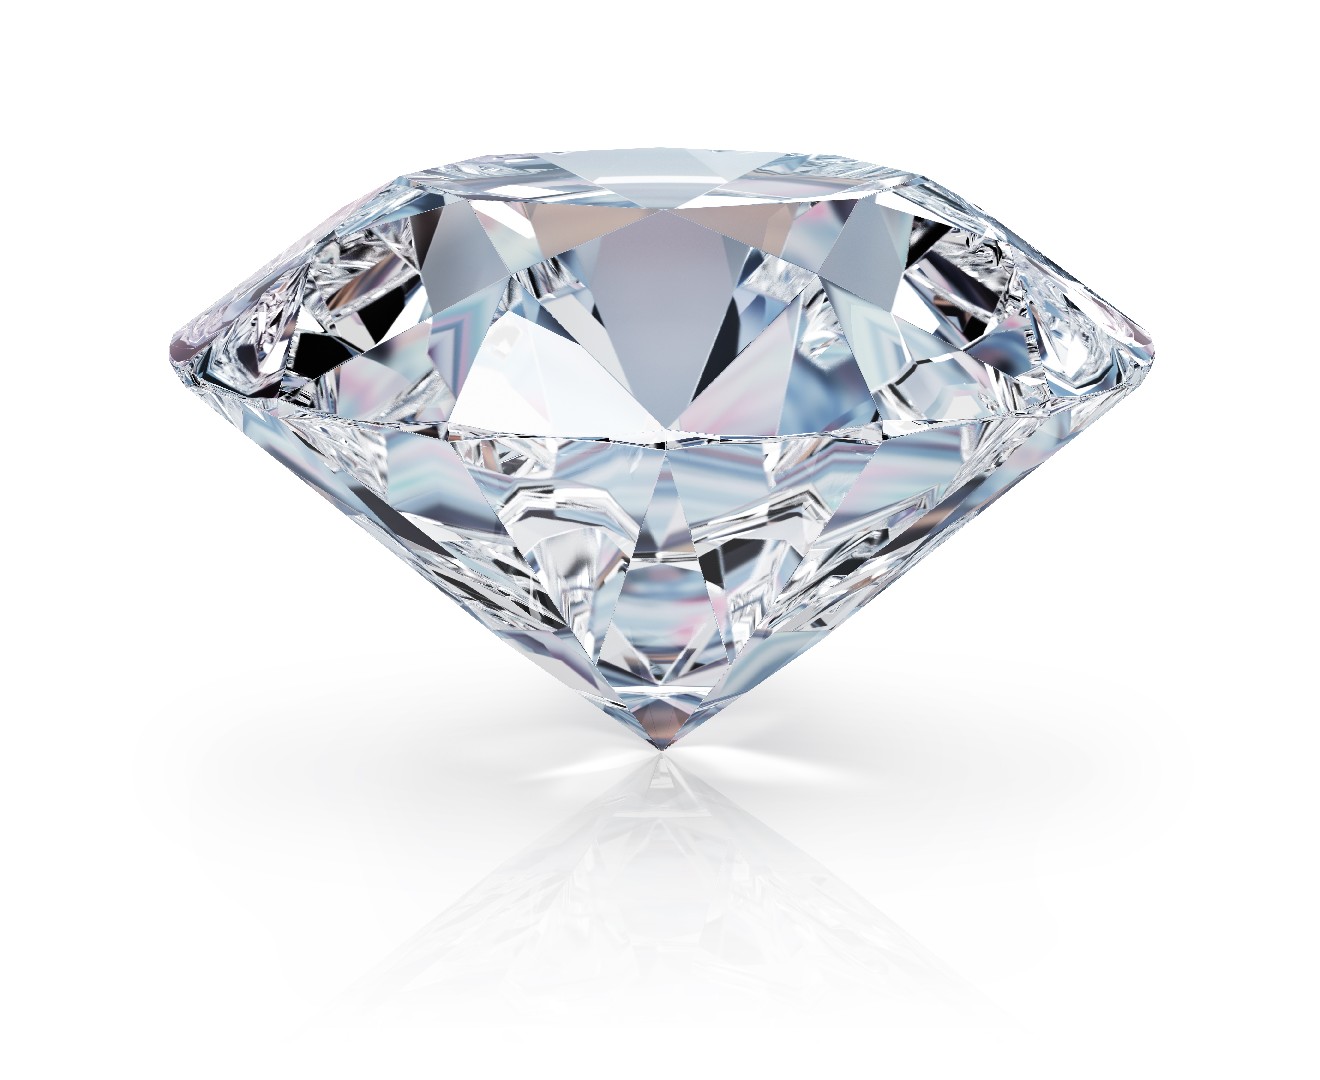 Diamant (Edelstein) (Diamond gemstone)